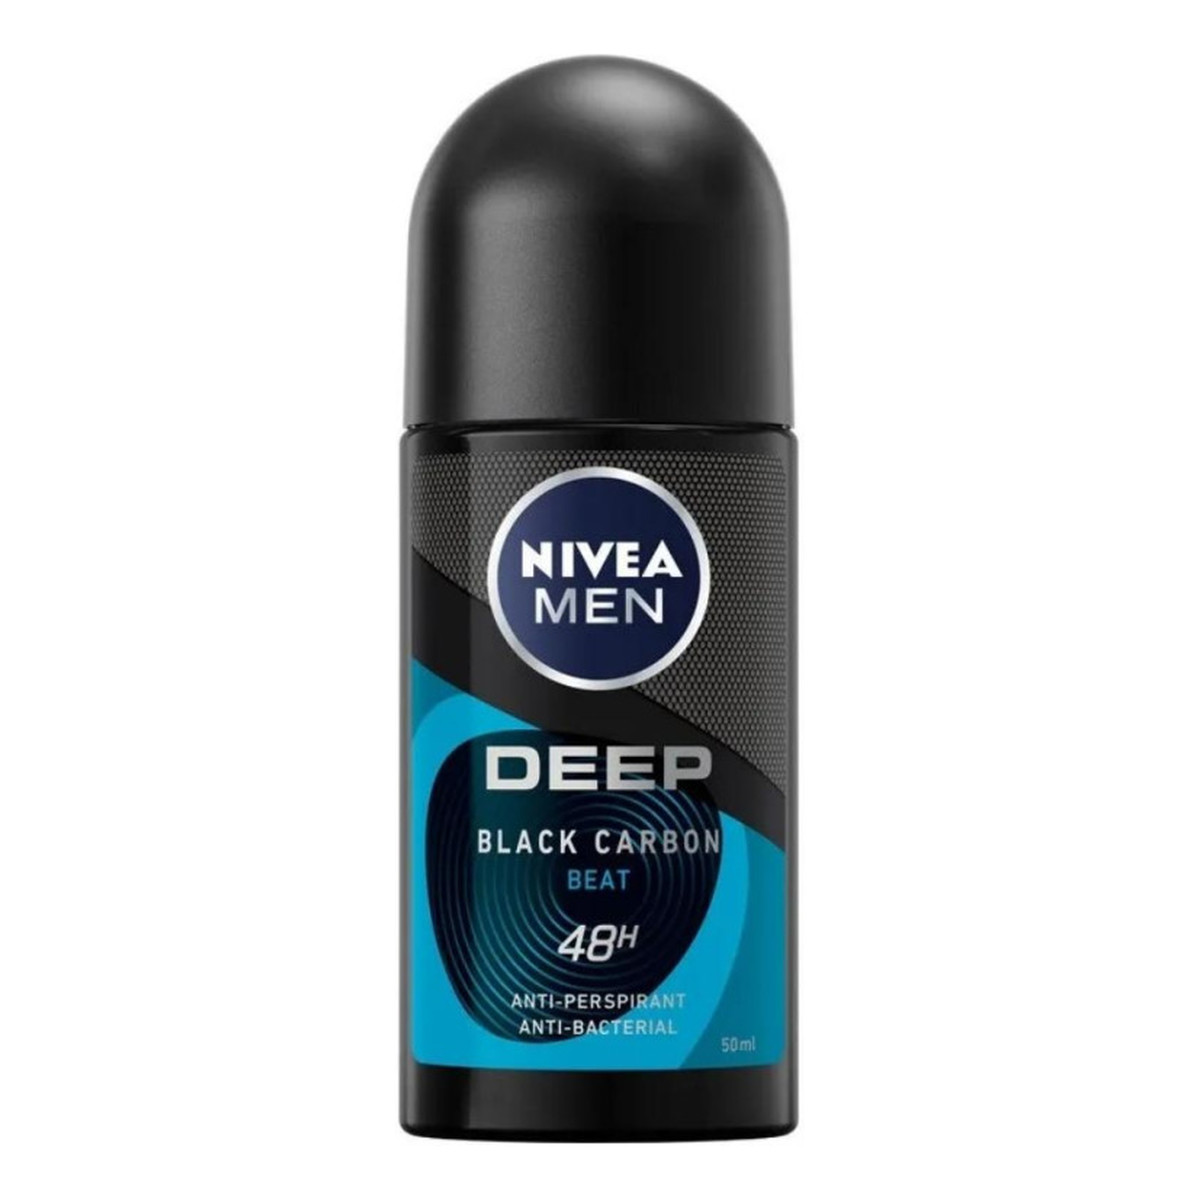 Nivea Men Deep Black Carbon Beat antyperspirant w kulce z aktywnym węglem 50ml